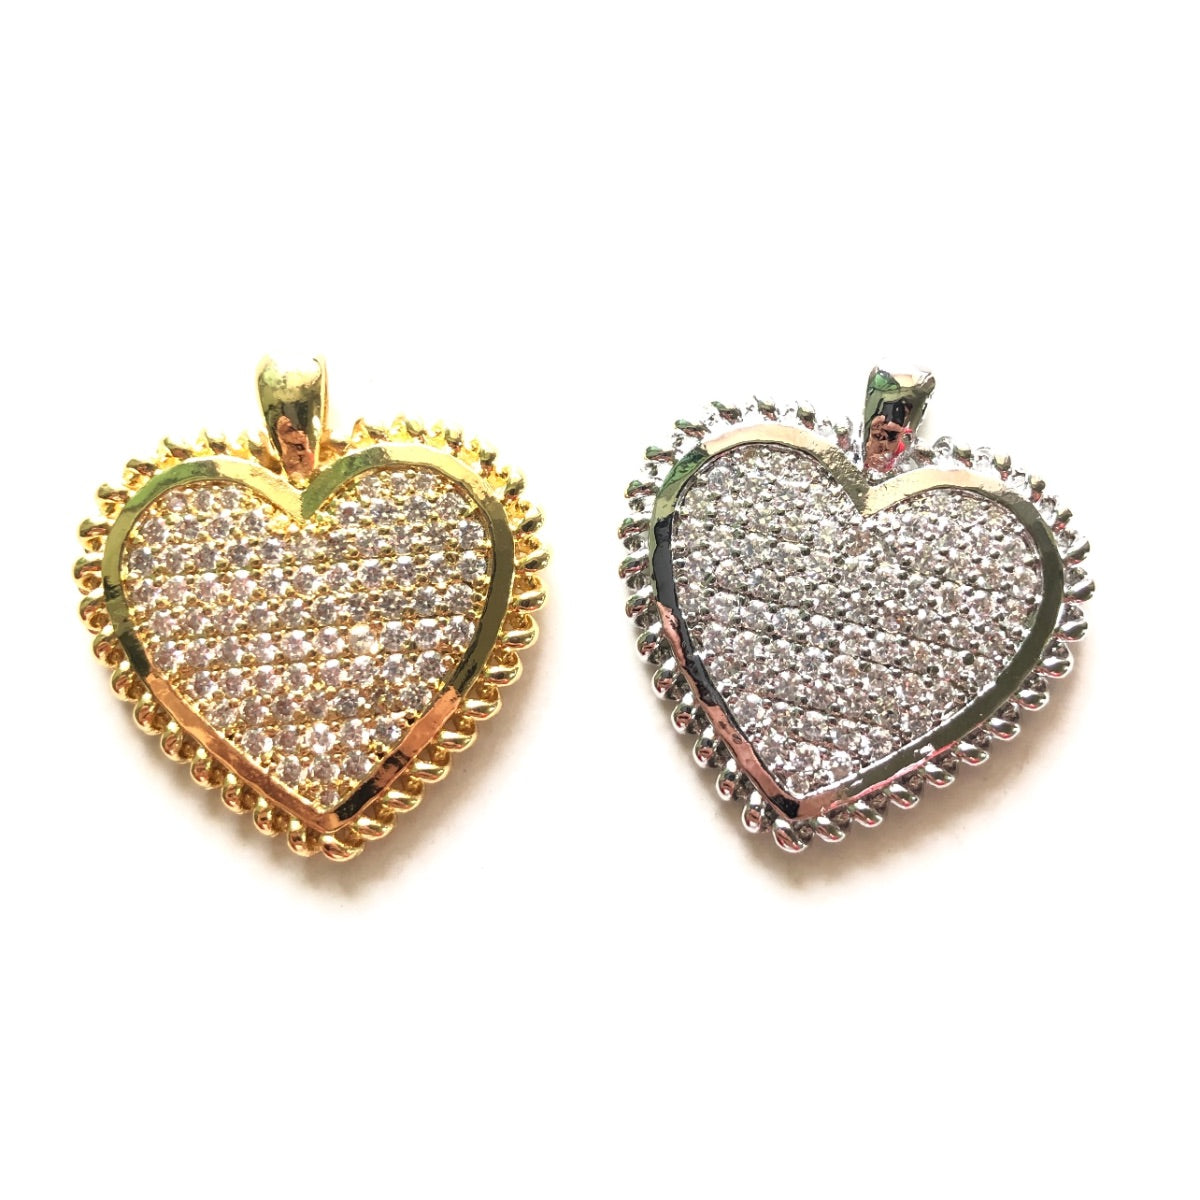 10pcs/lot 26.5*25mm CZ Paved Heart Charm Pendants CZ Paved Charms Hearts Charms Beads Beyond